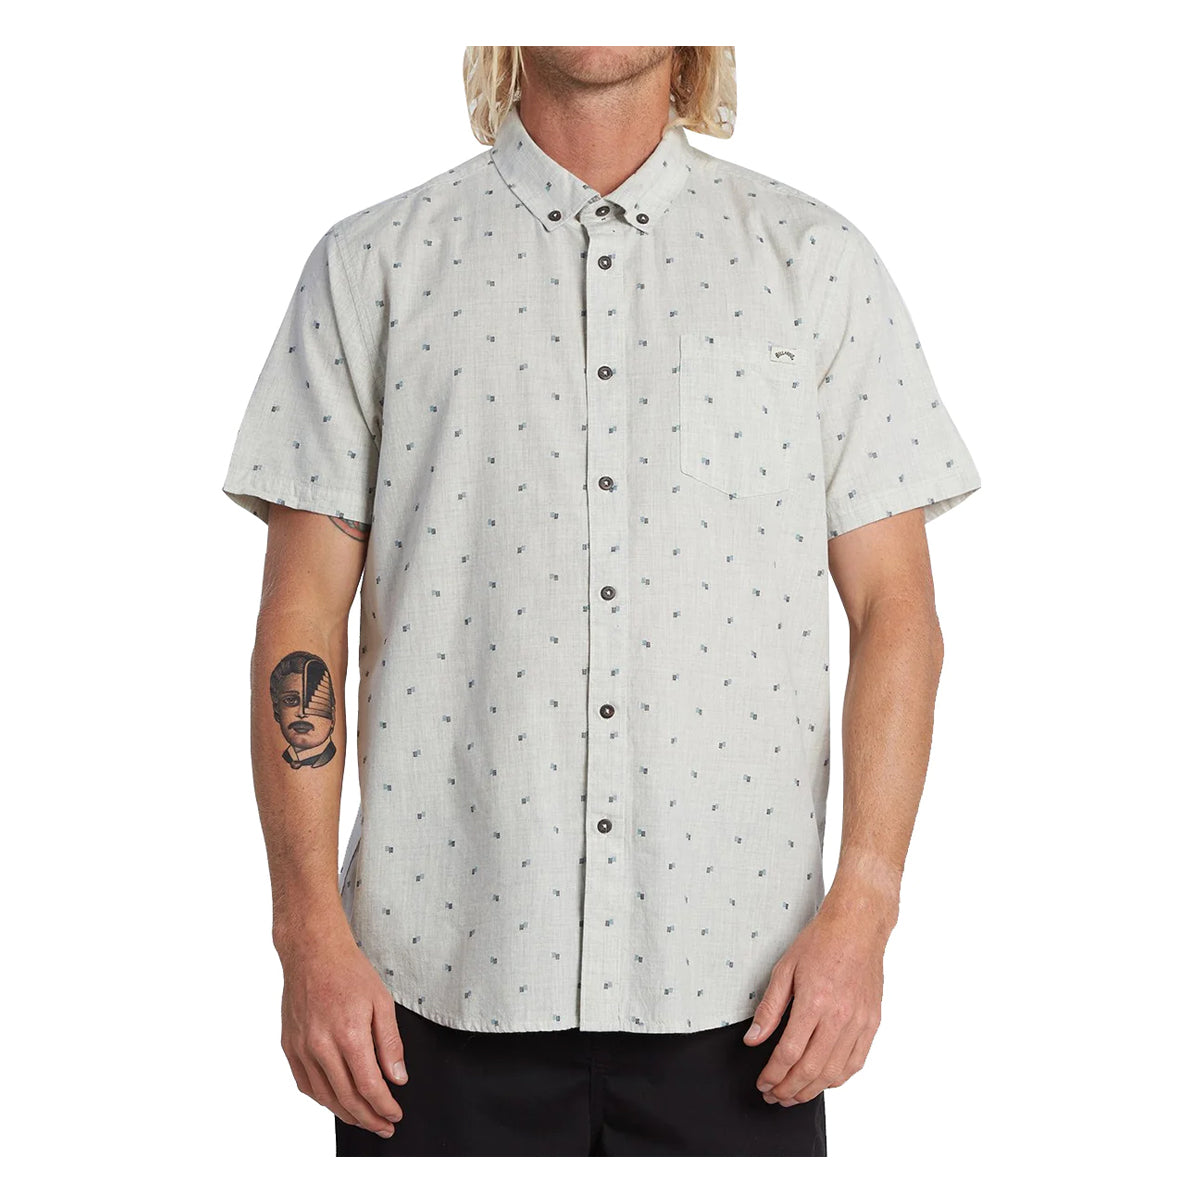 Billabong All Day Jacquard Men's Button Up Short-Sleeve Shirts